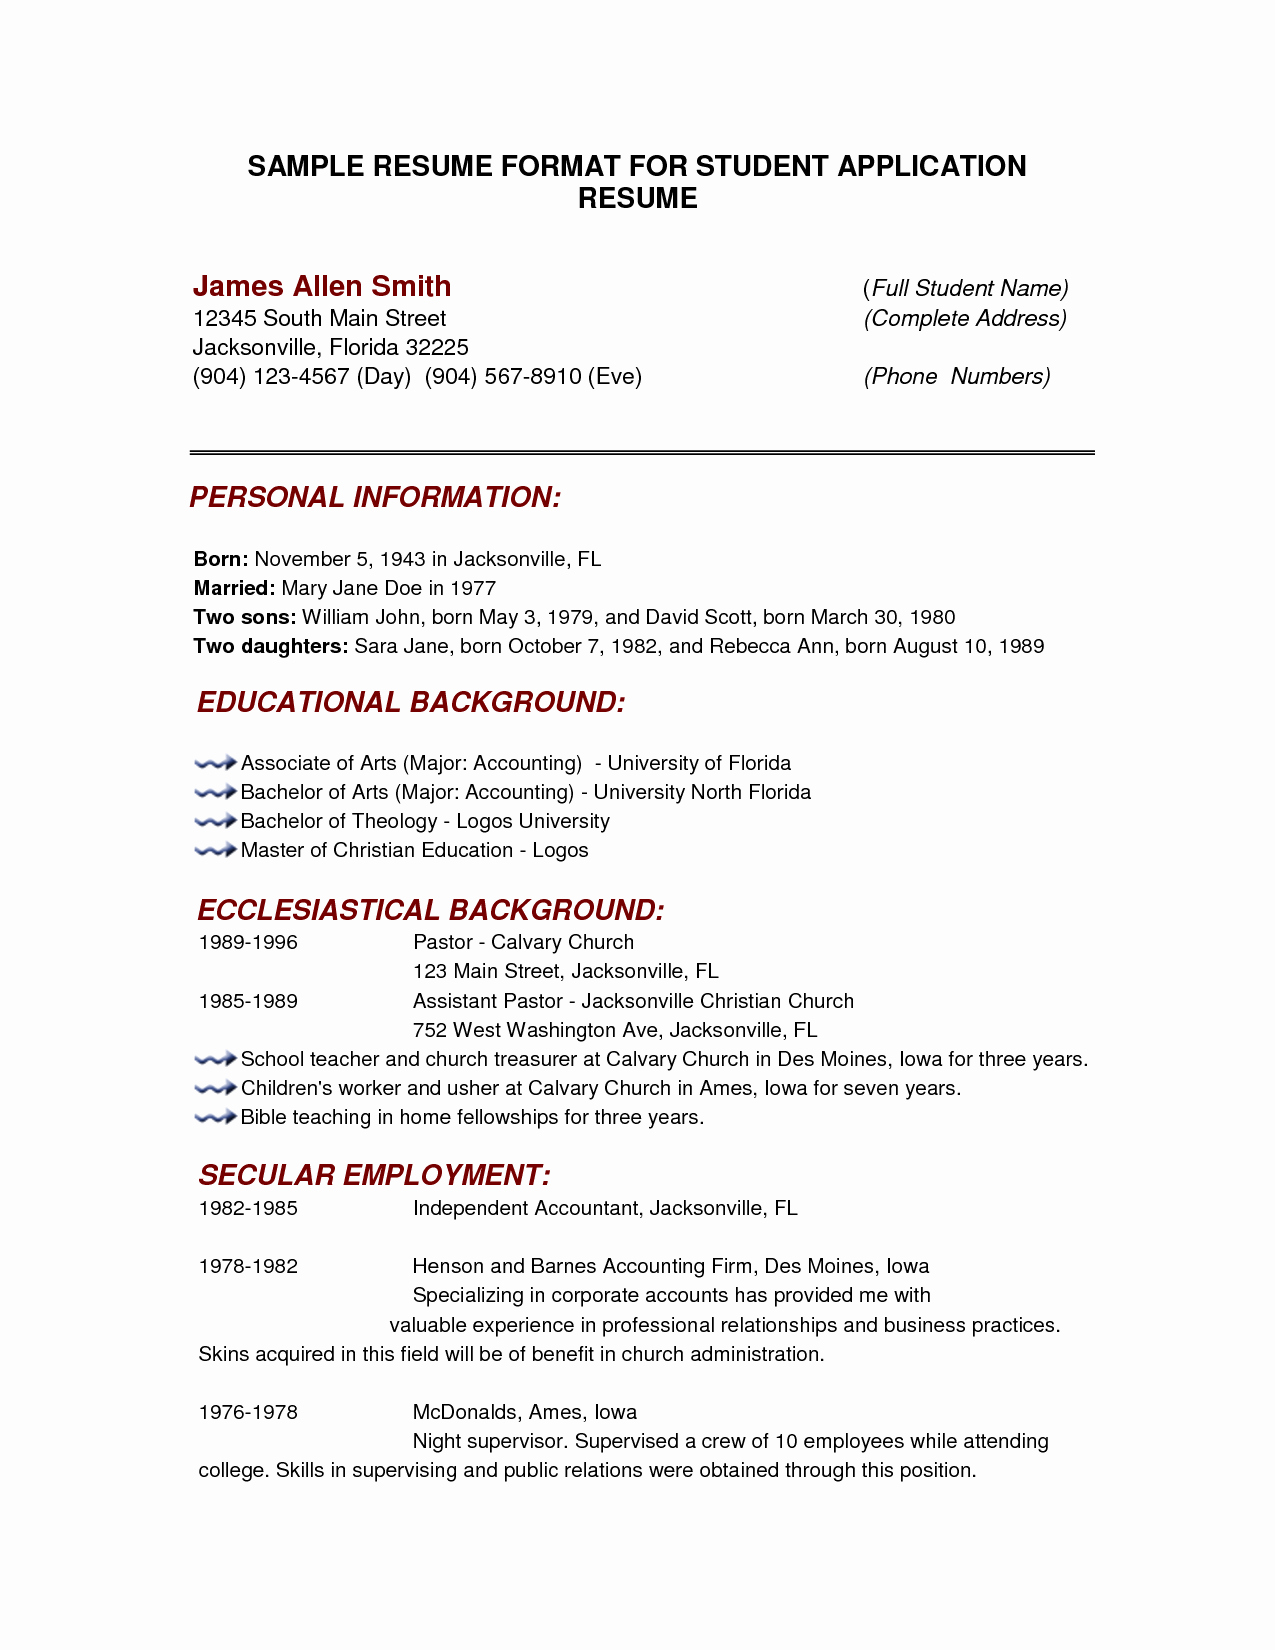 Application Resume